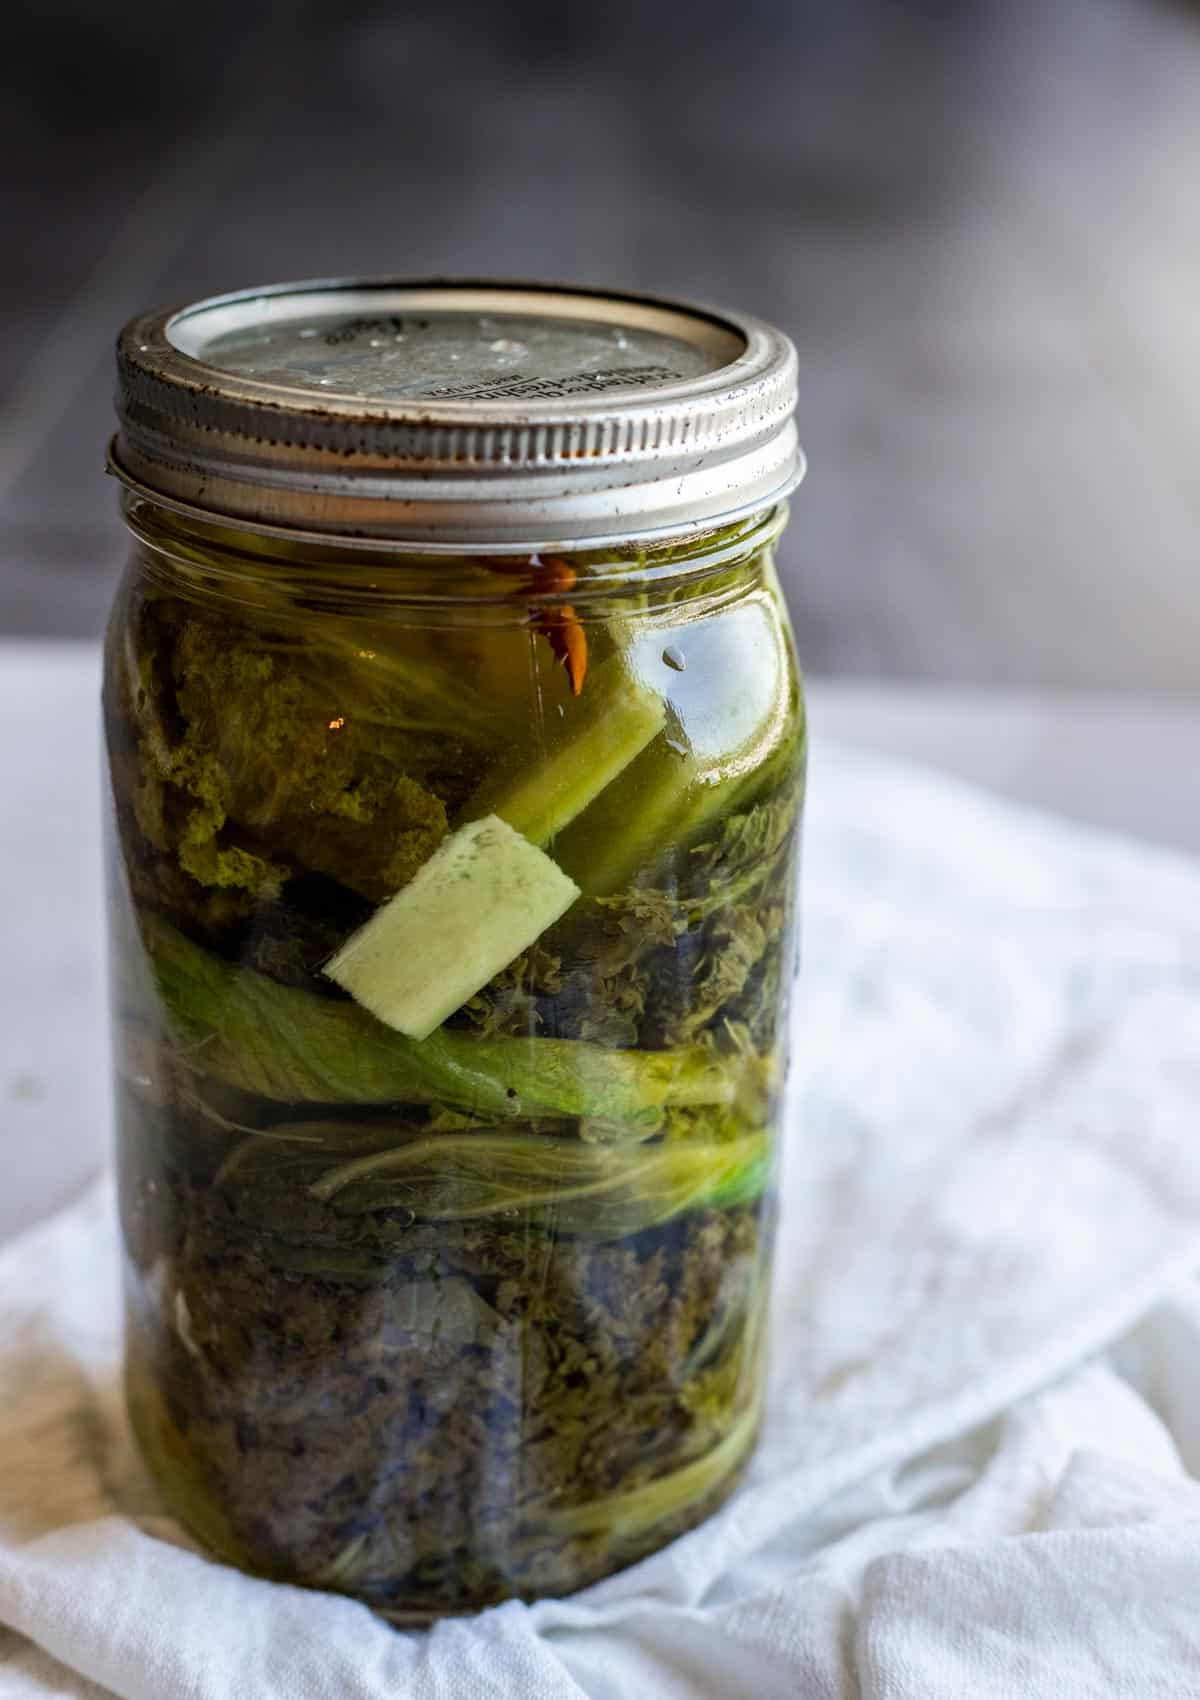 Pickled Mustard Greens (酸菜) - Oh My Food Recipes, Recipe